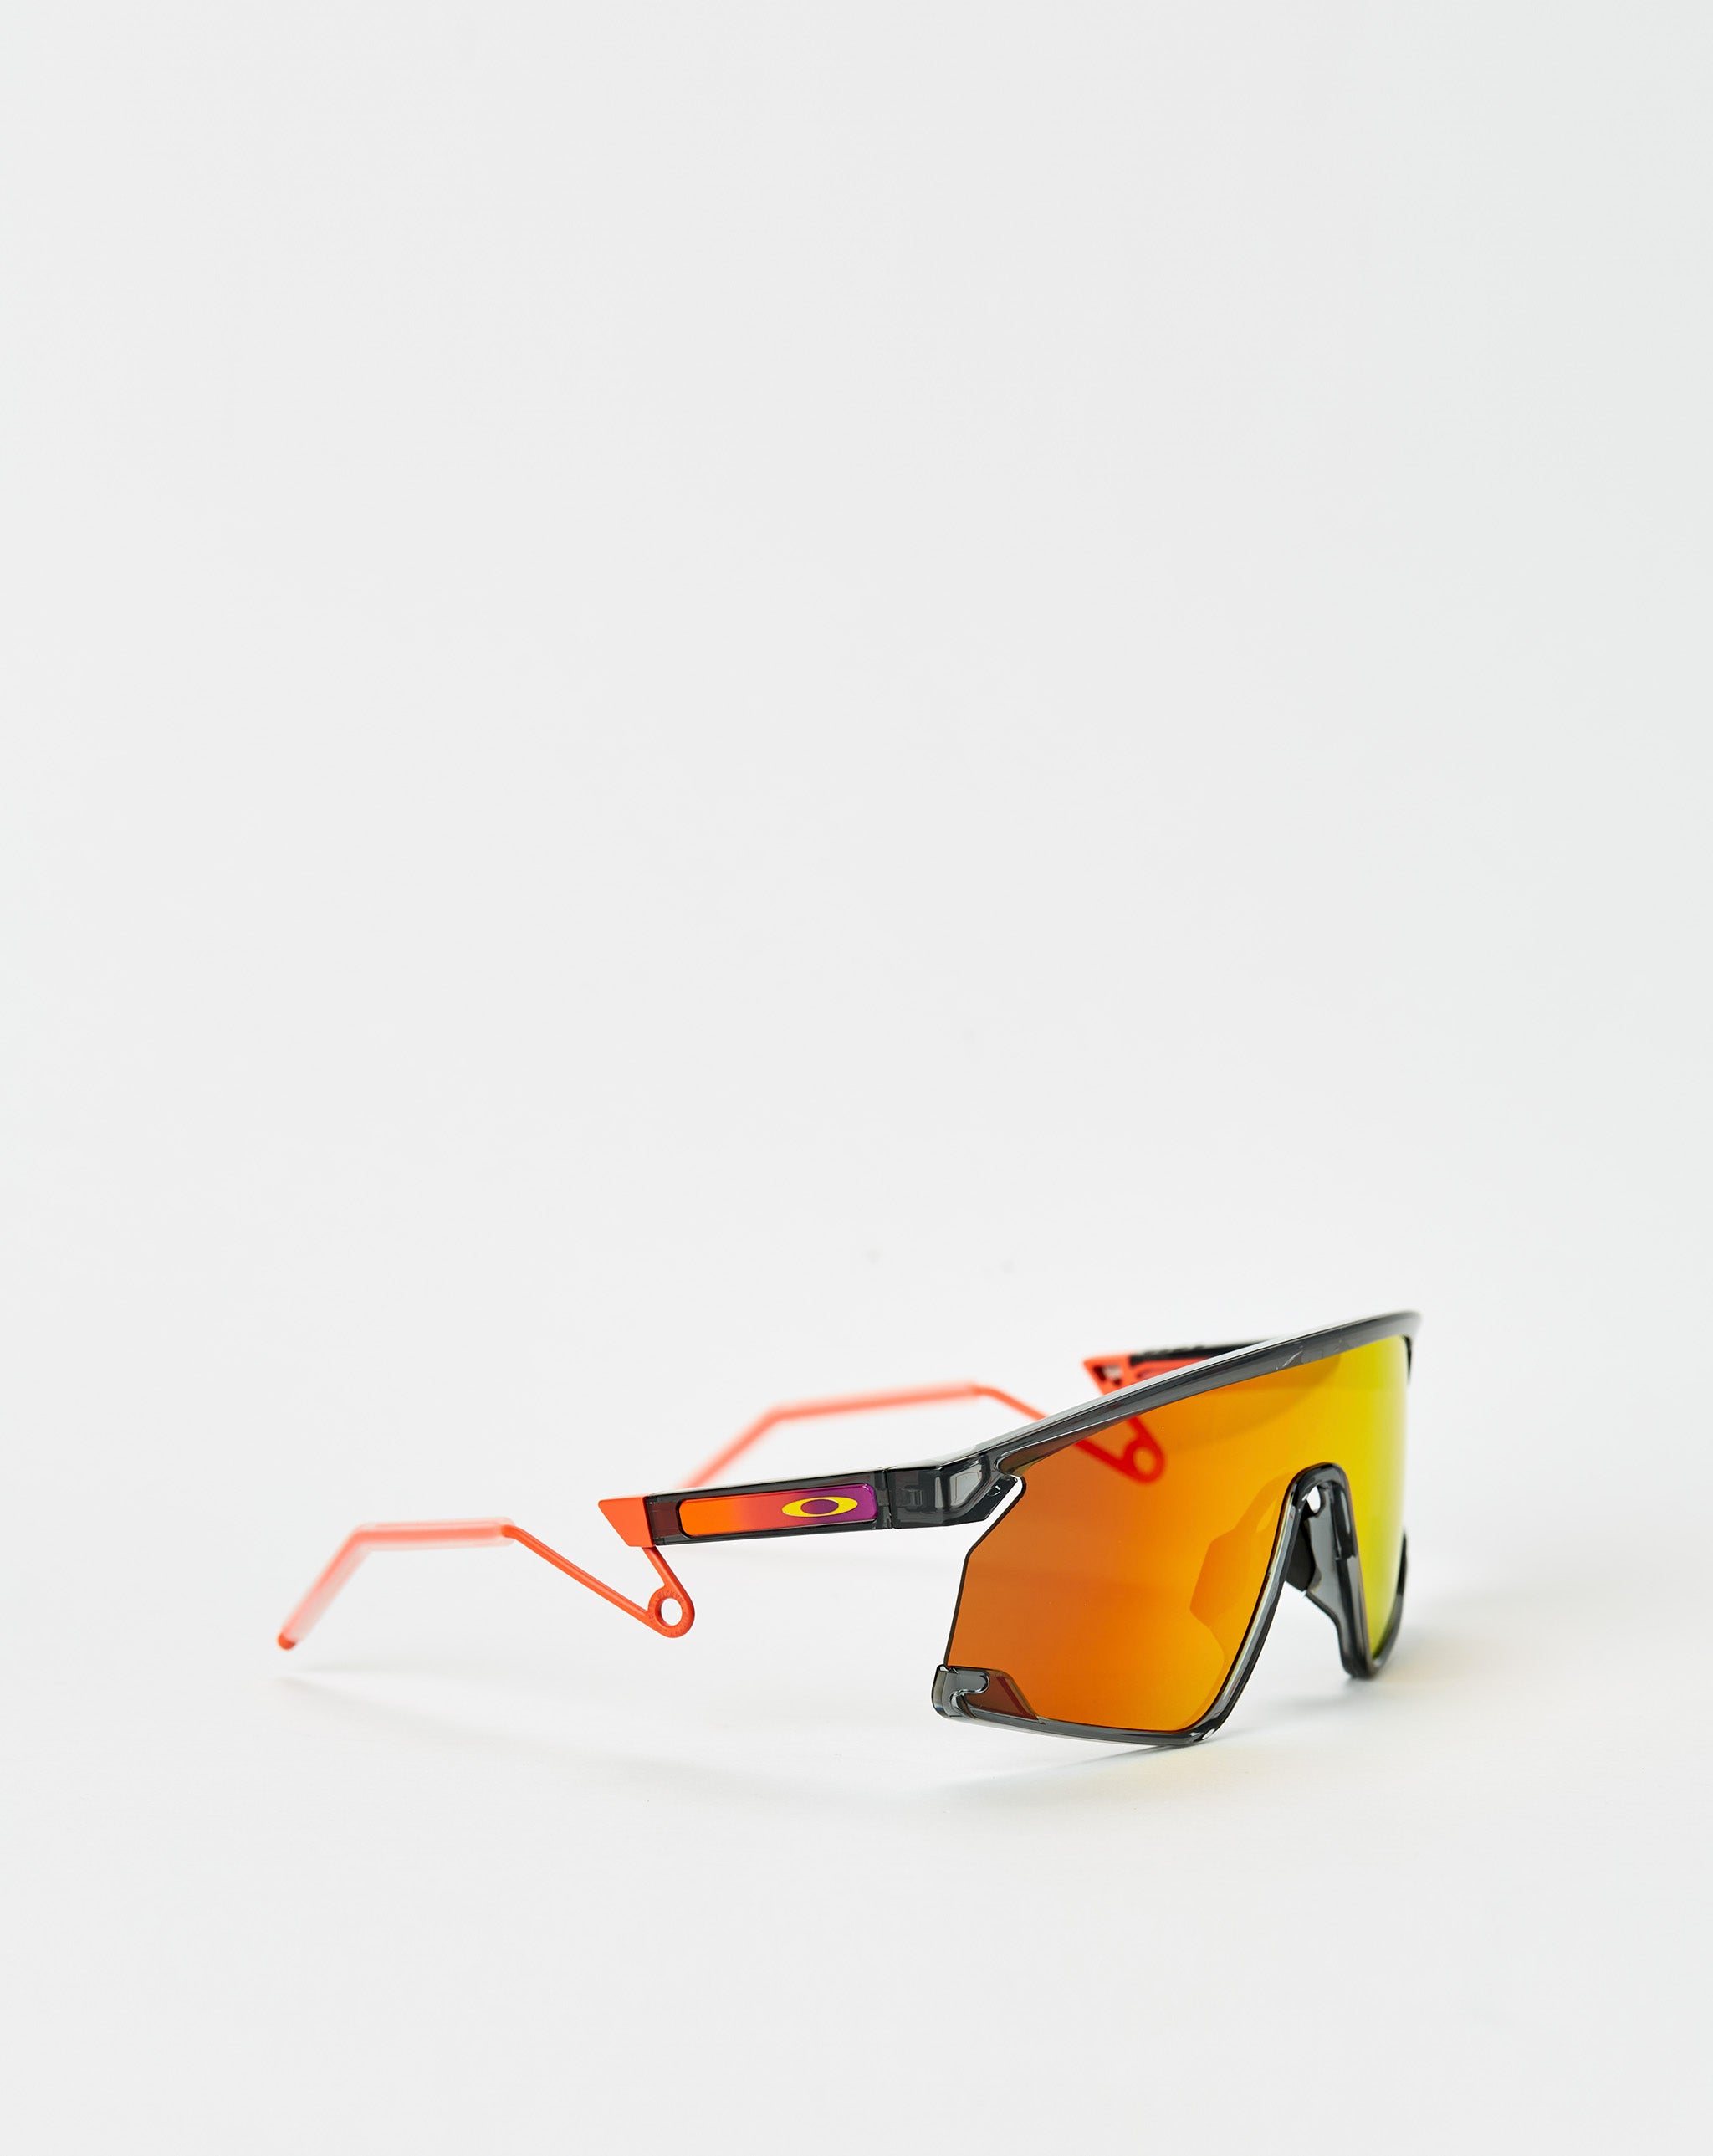 Oakley Bottega Venetta Eyewear BV1005S Sunglasses  - Cheap 127-0 Jordan outlet